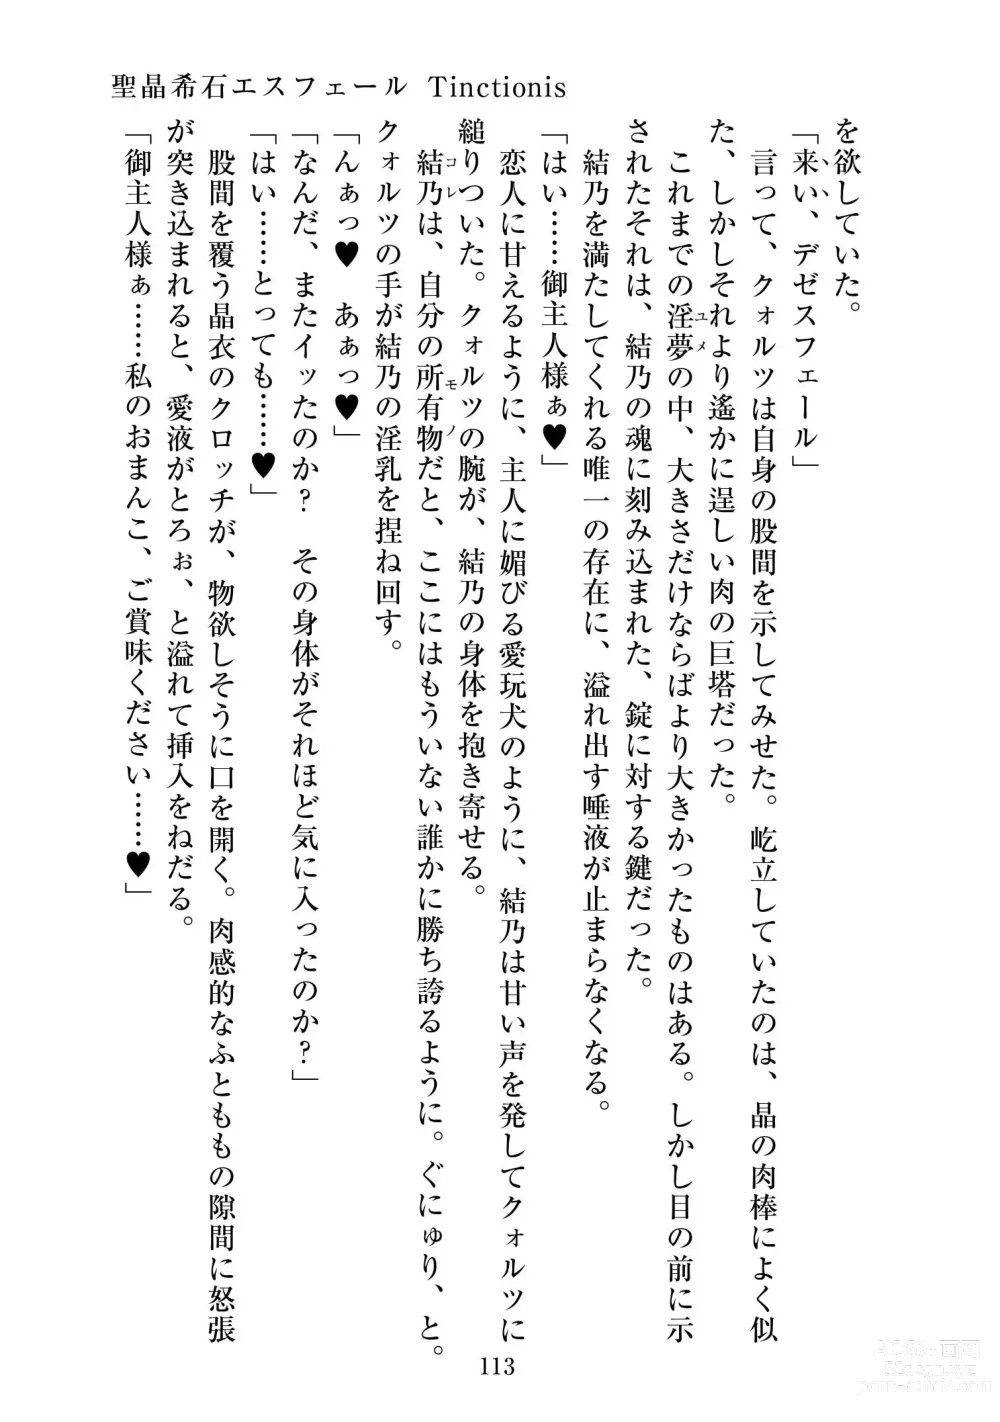 Page 114 of doujinshi Holy Crystal Esphére Tinctionis